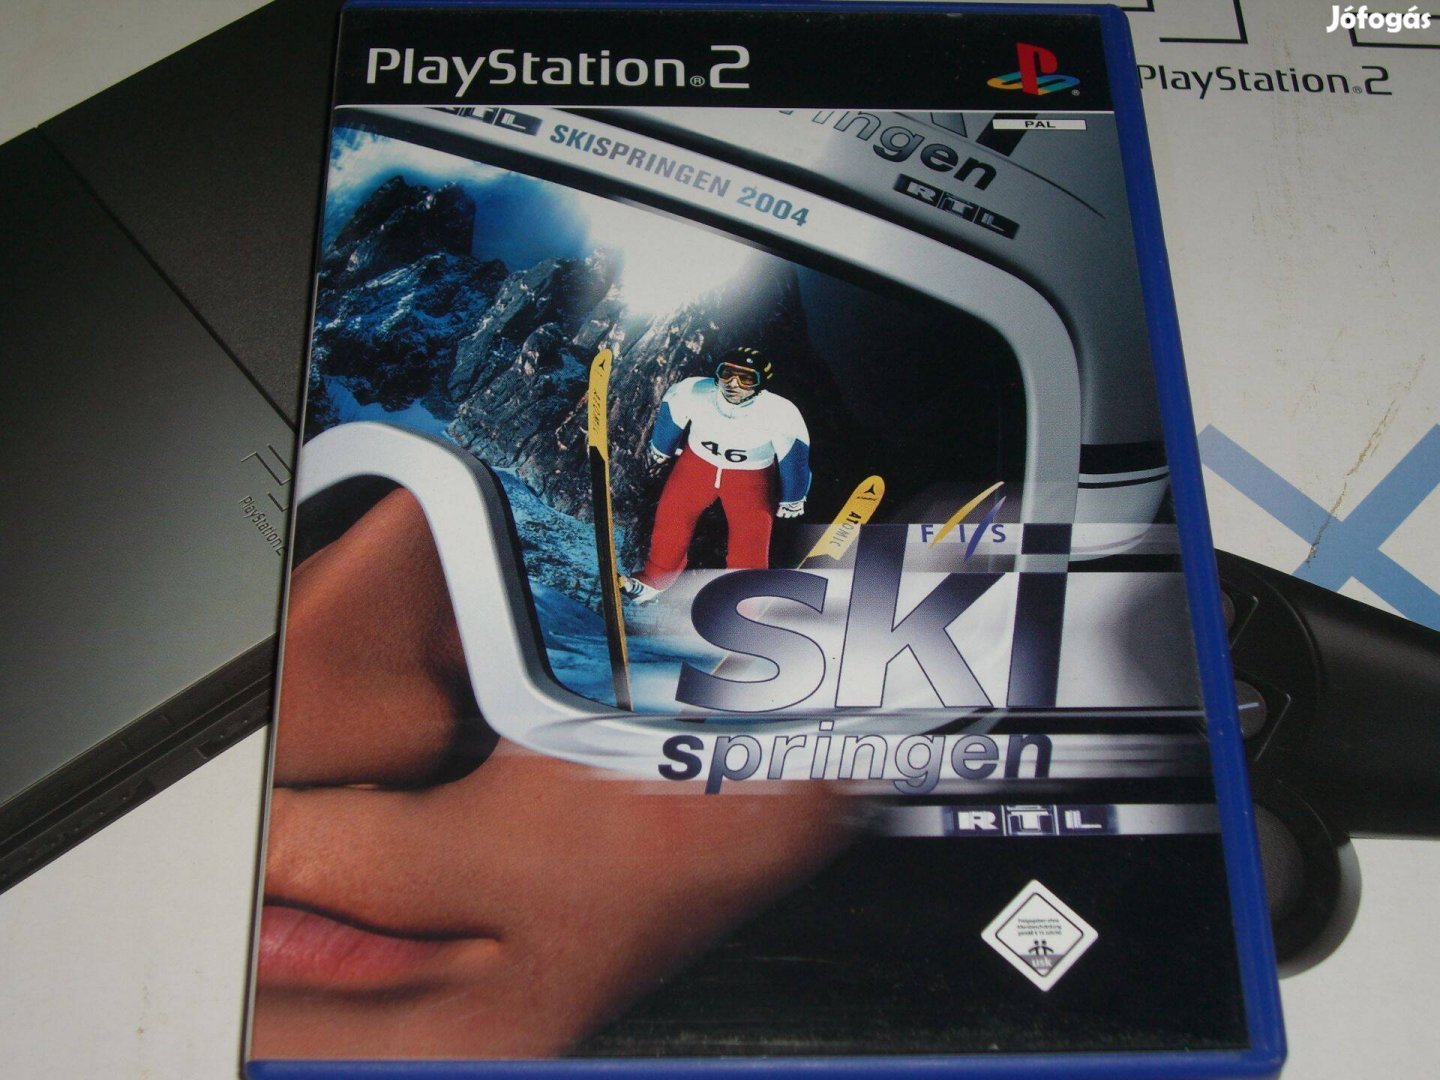 RTL Skispringen Playstation 2 eredeti lemez eladó